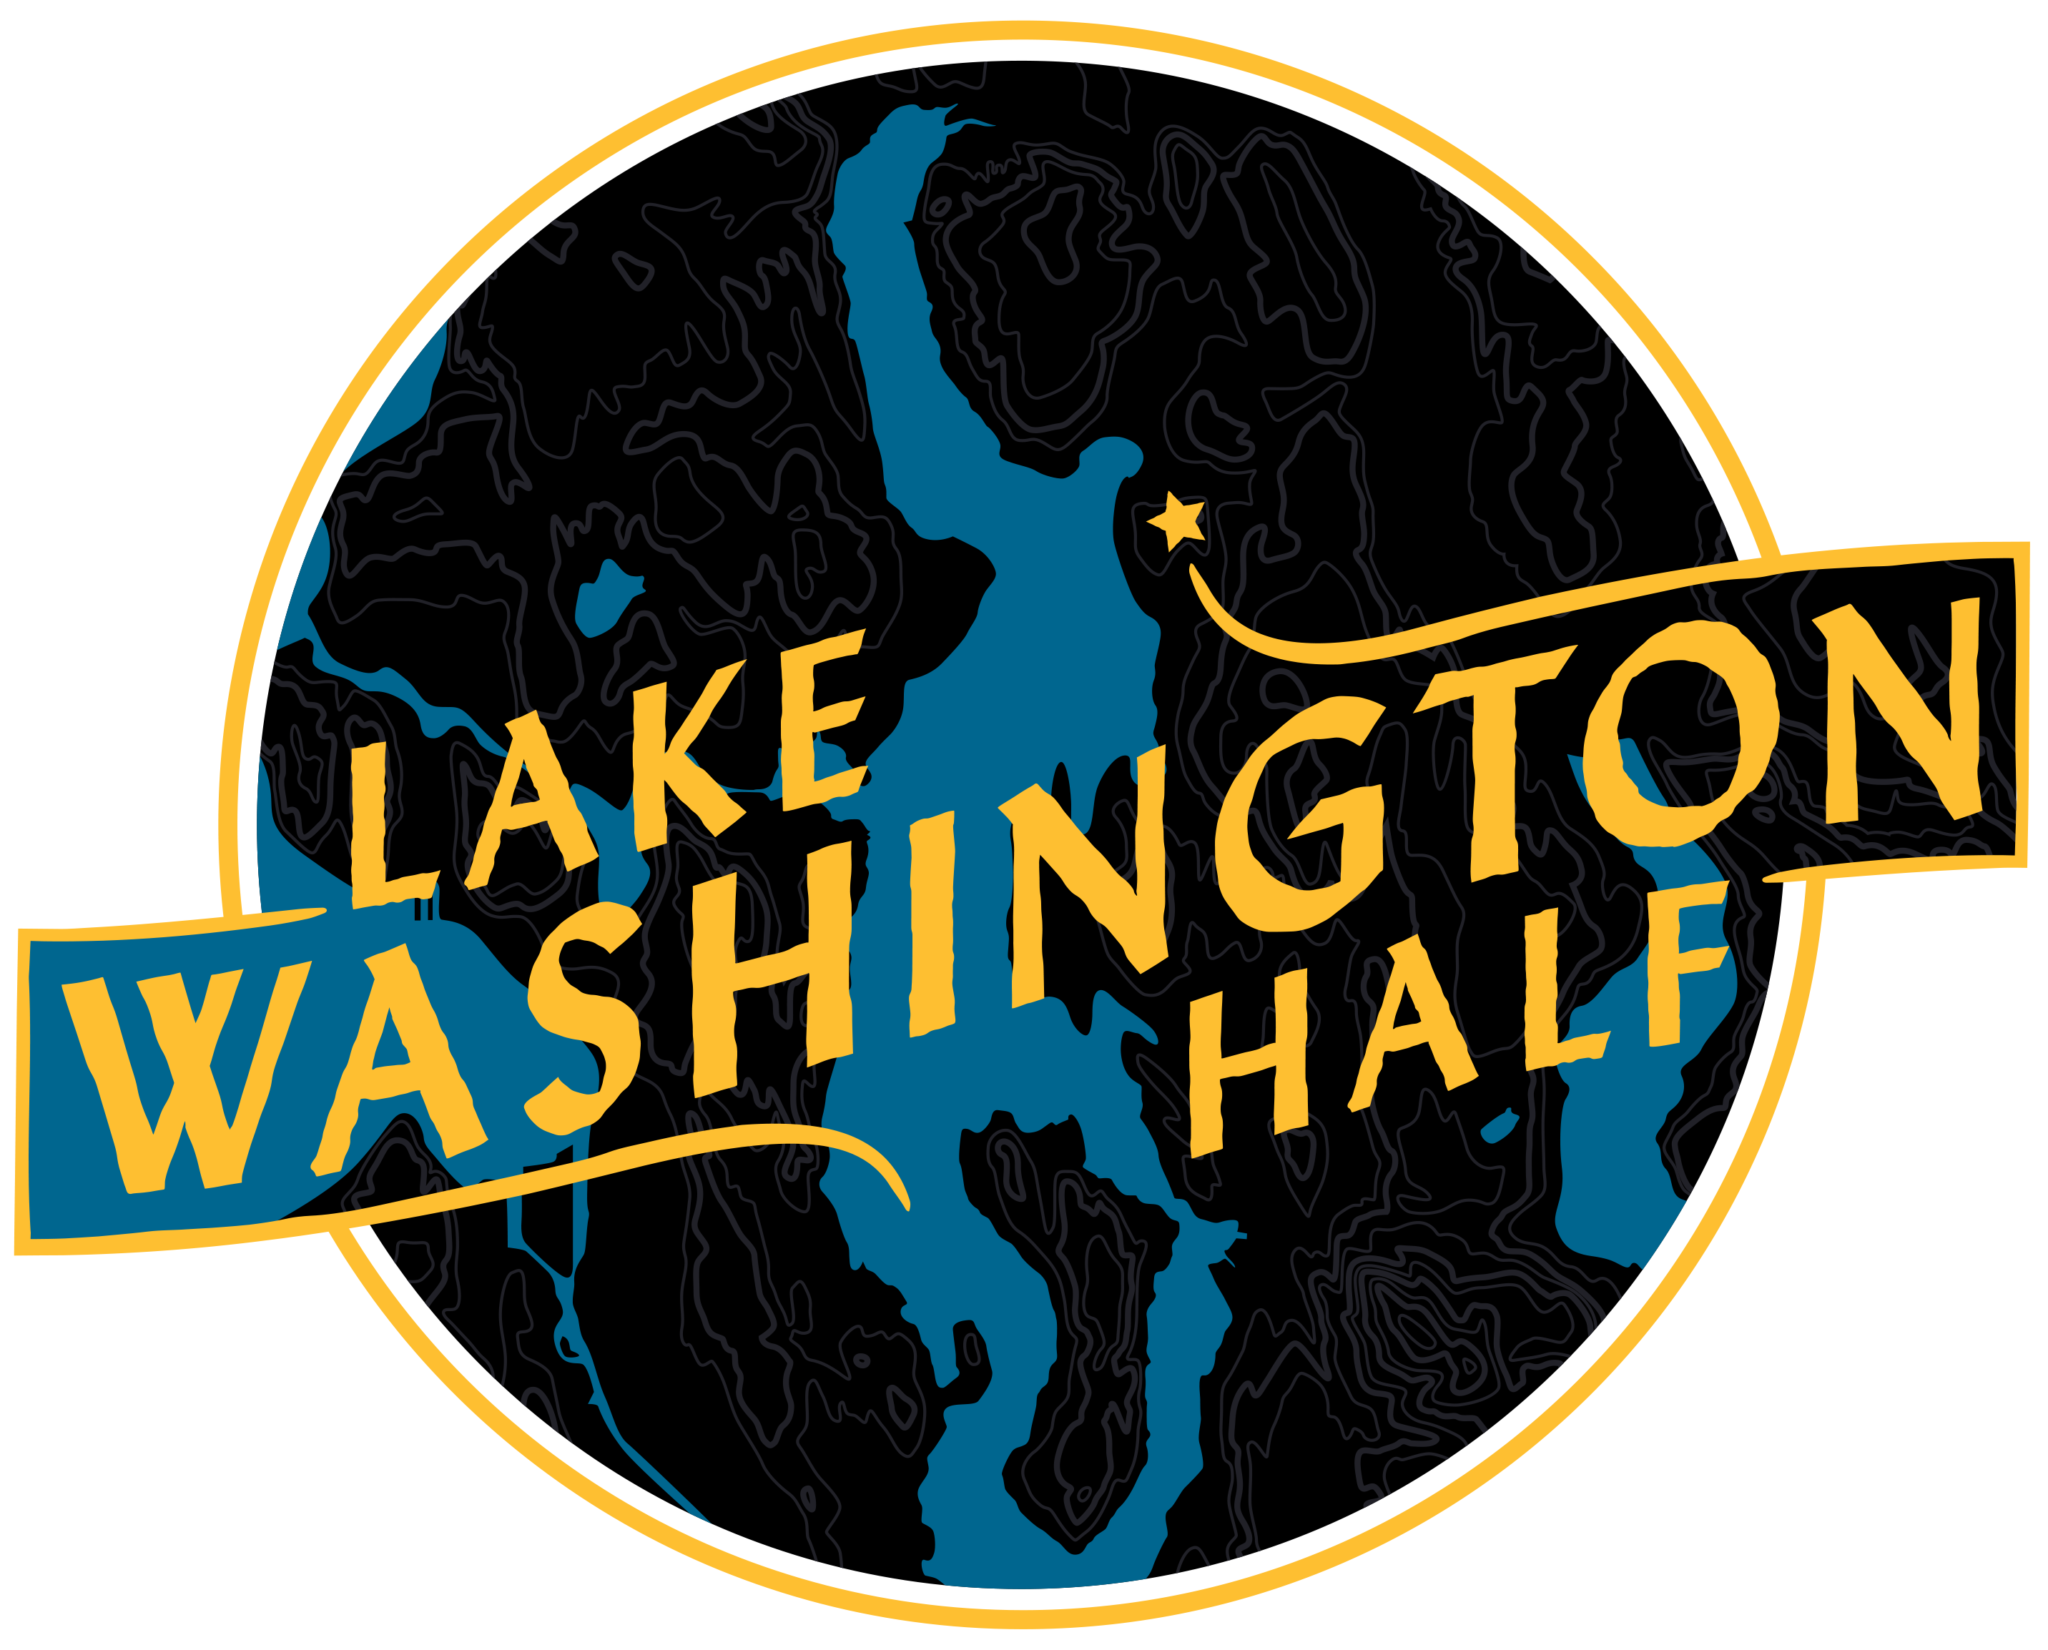 Lake Washington Half Marathon logo on RaceRaves